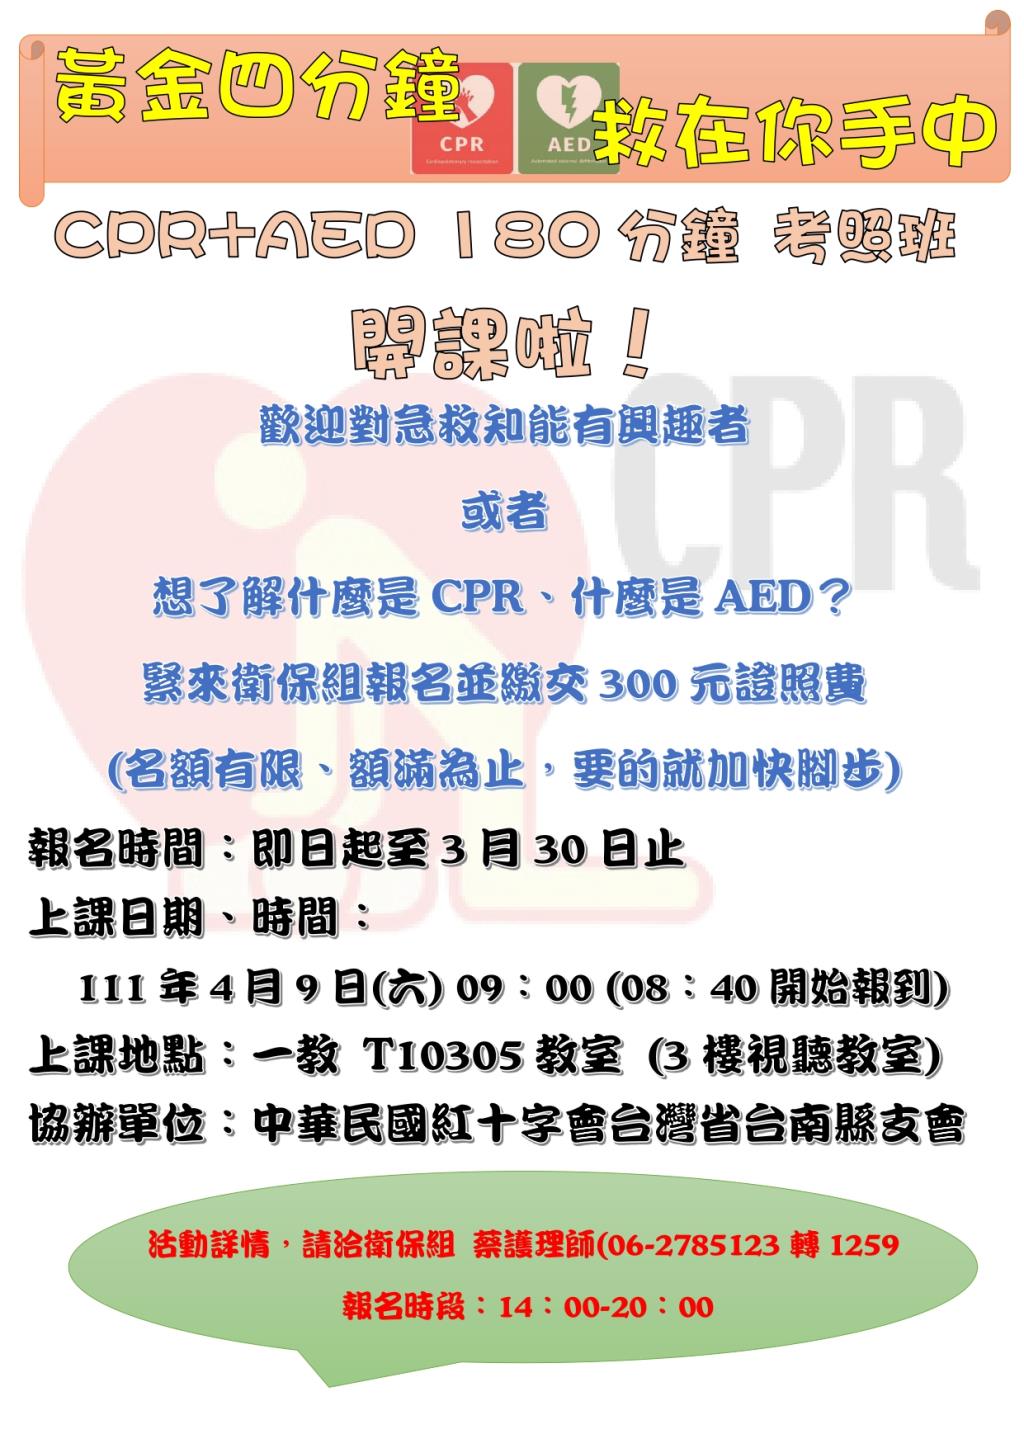 CPR+AED 180分鐘考照班開放報名(即日起至3/30止)